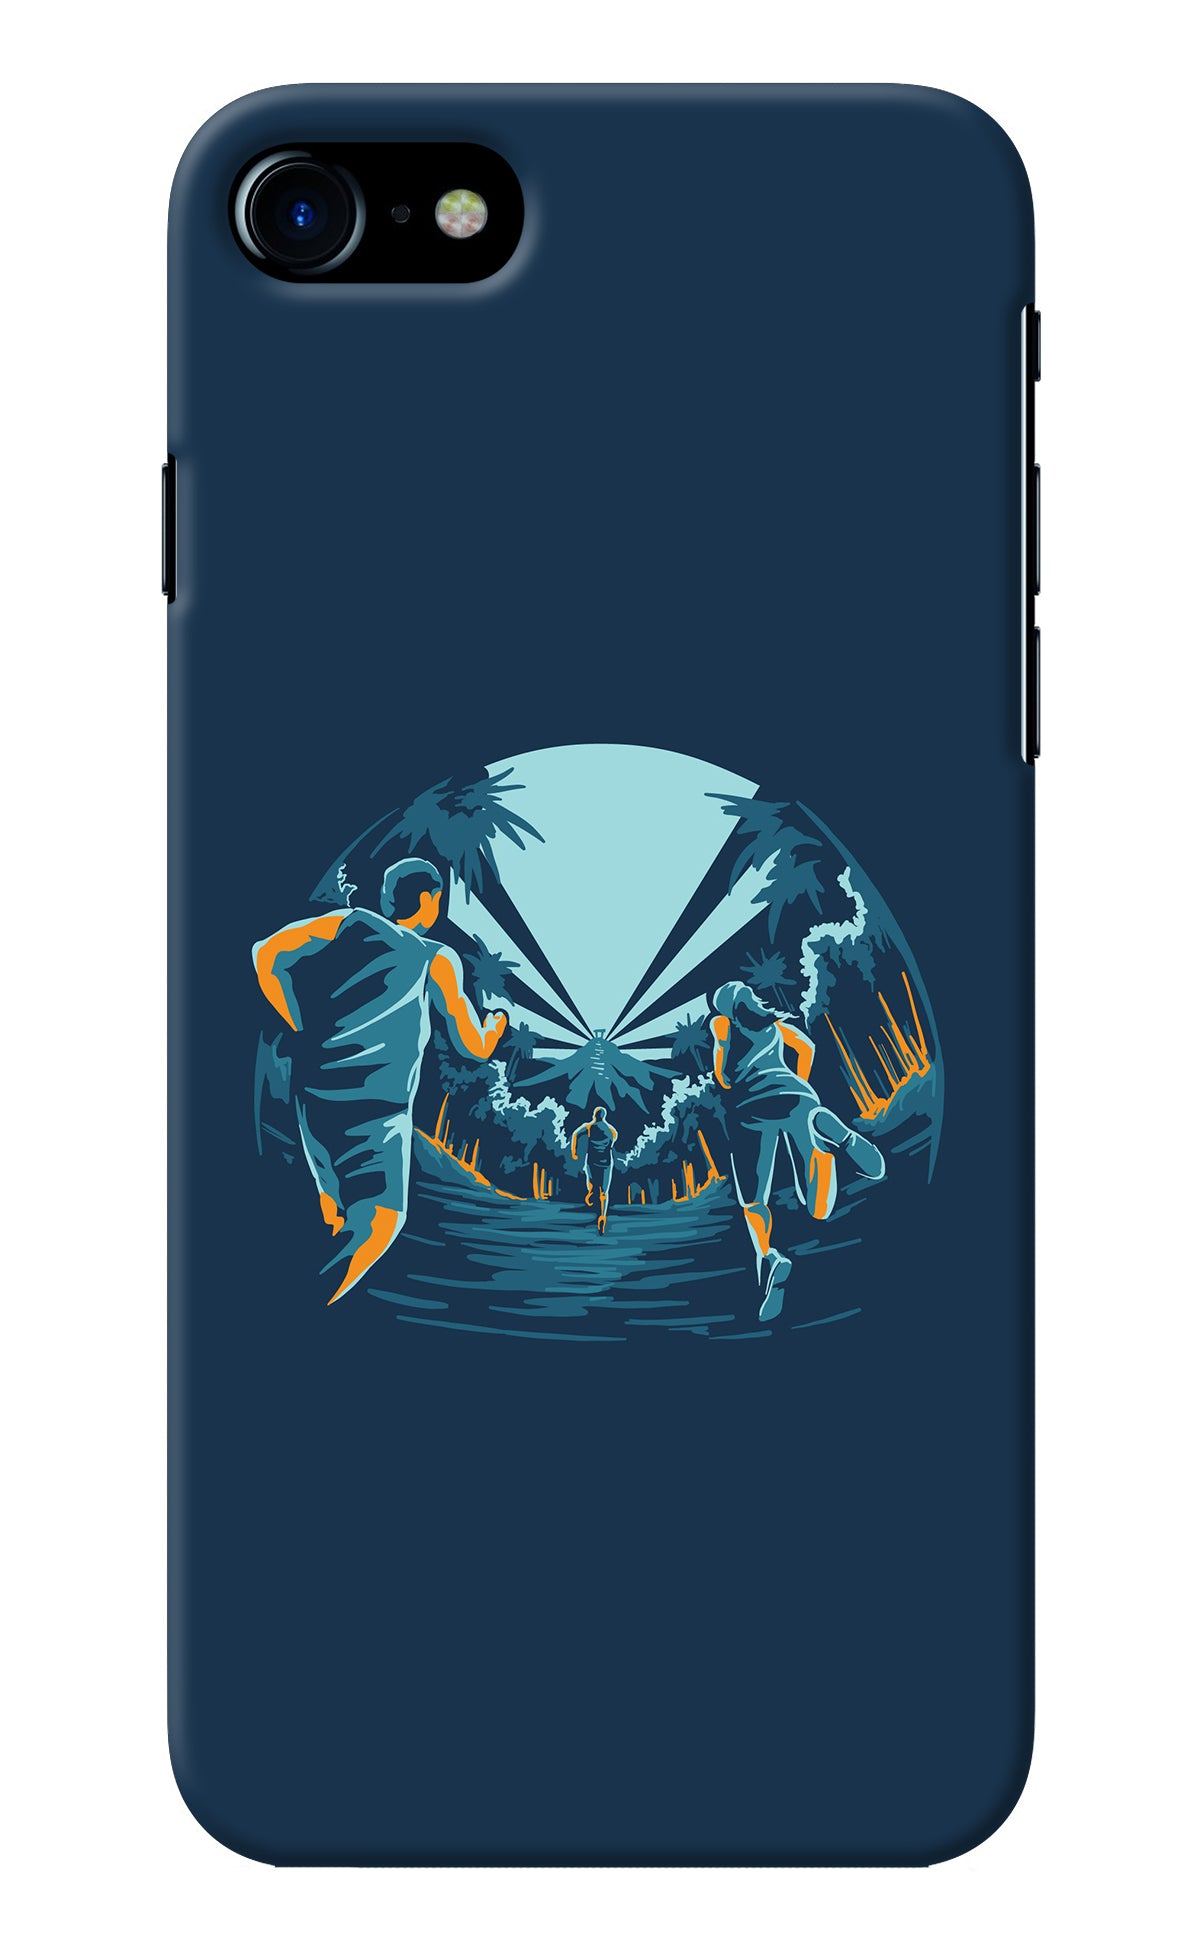 Team Run iPhone 8/SE 2020 Back Cover